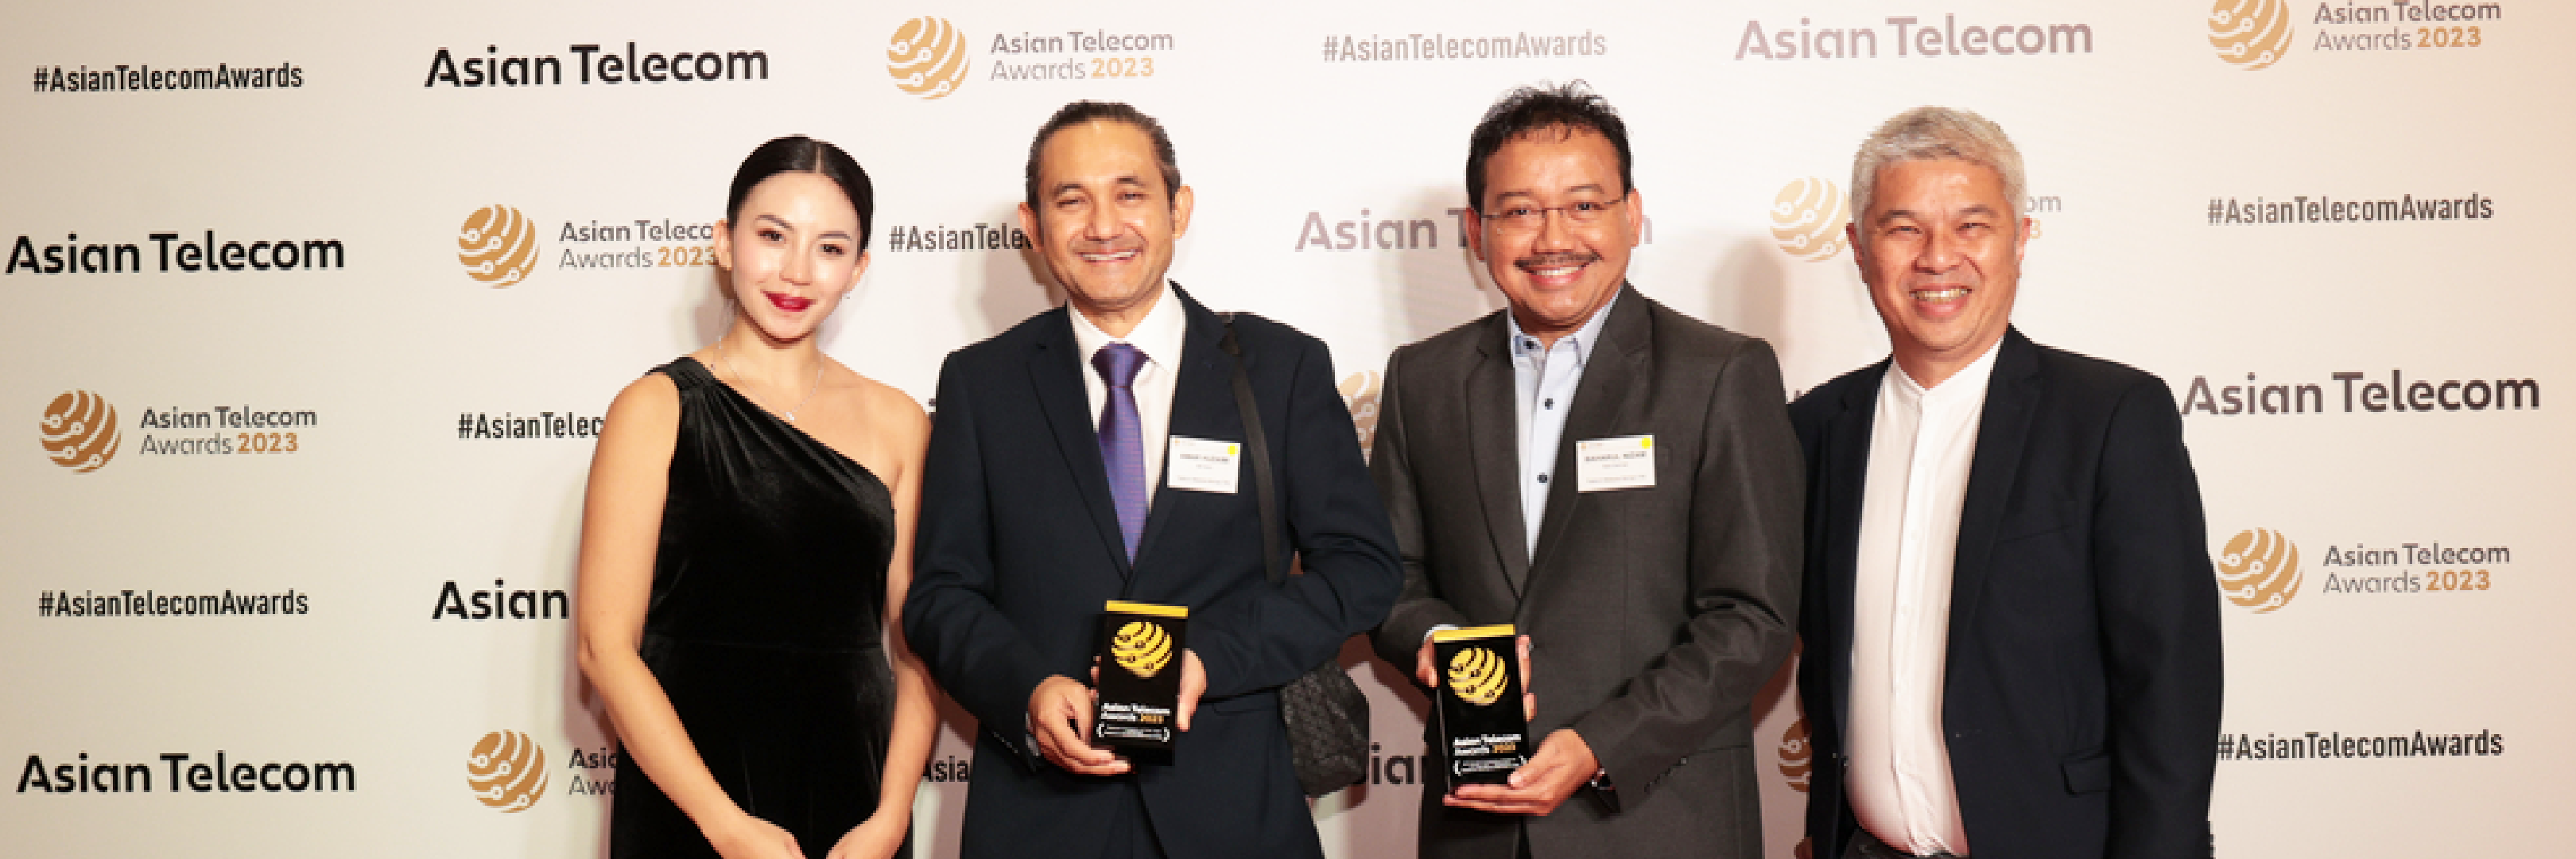 Asian-Telecom-Awards 5